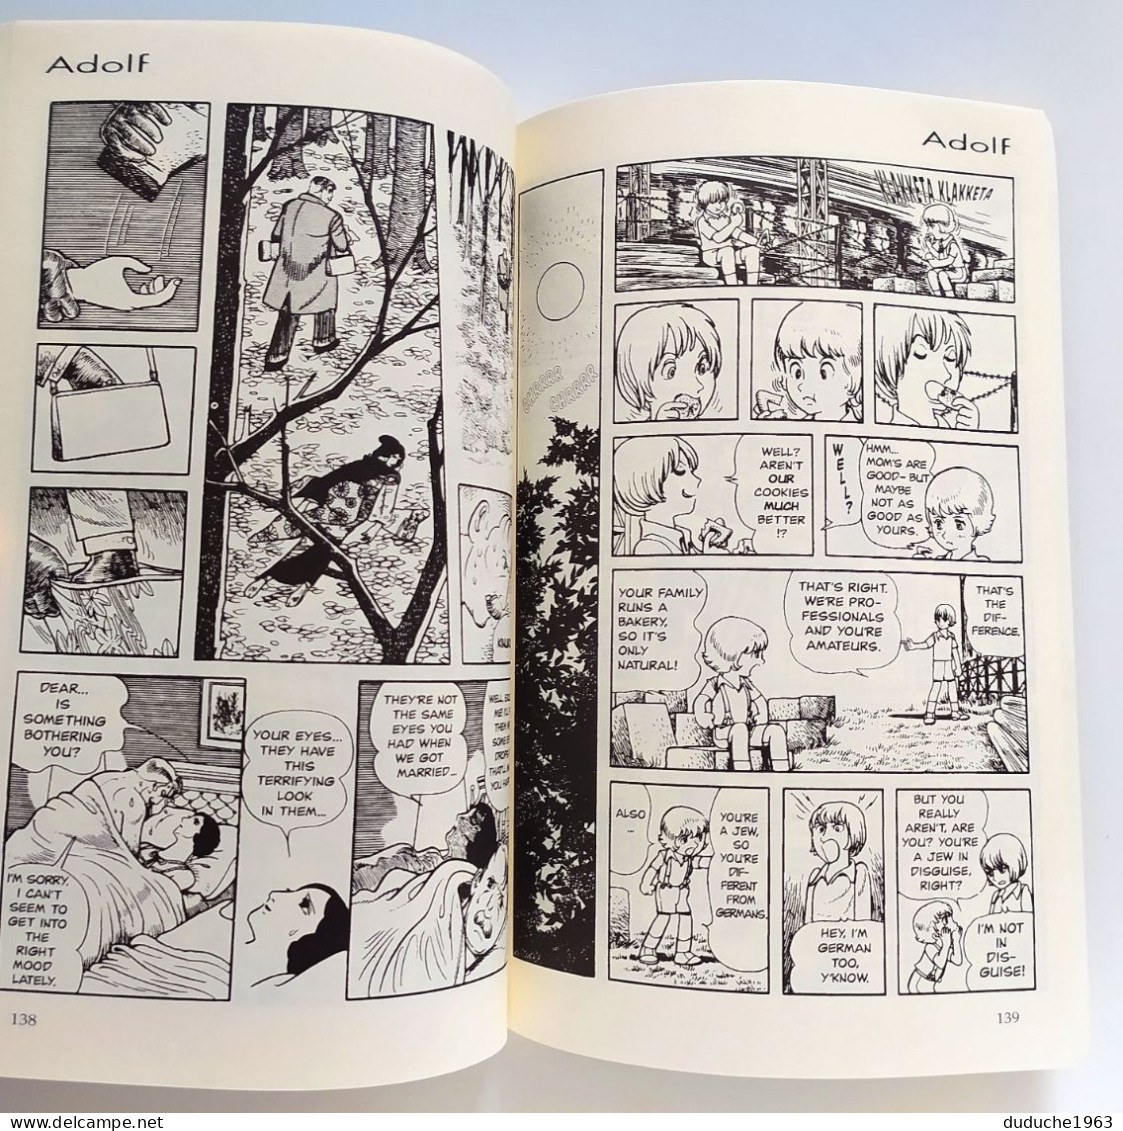 Adolf - A Tale Of The Twentieth Century. Osamu Tezuka - Altri Editori